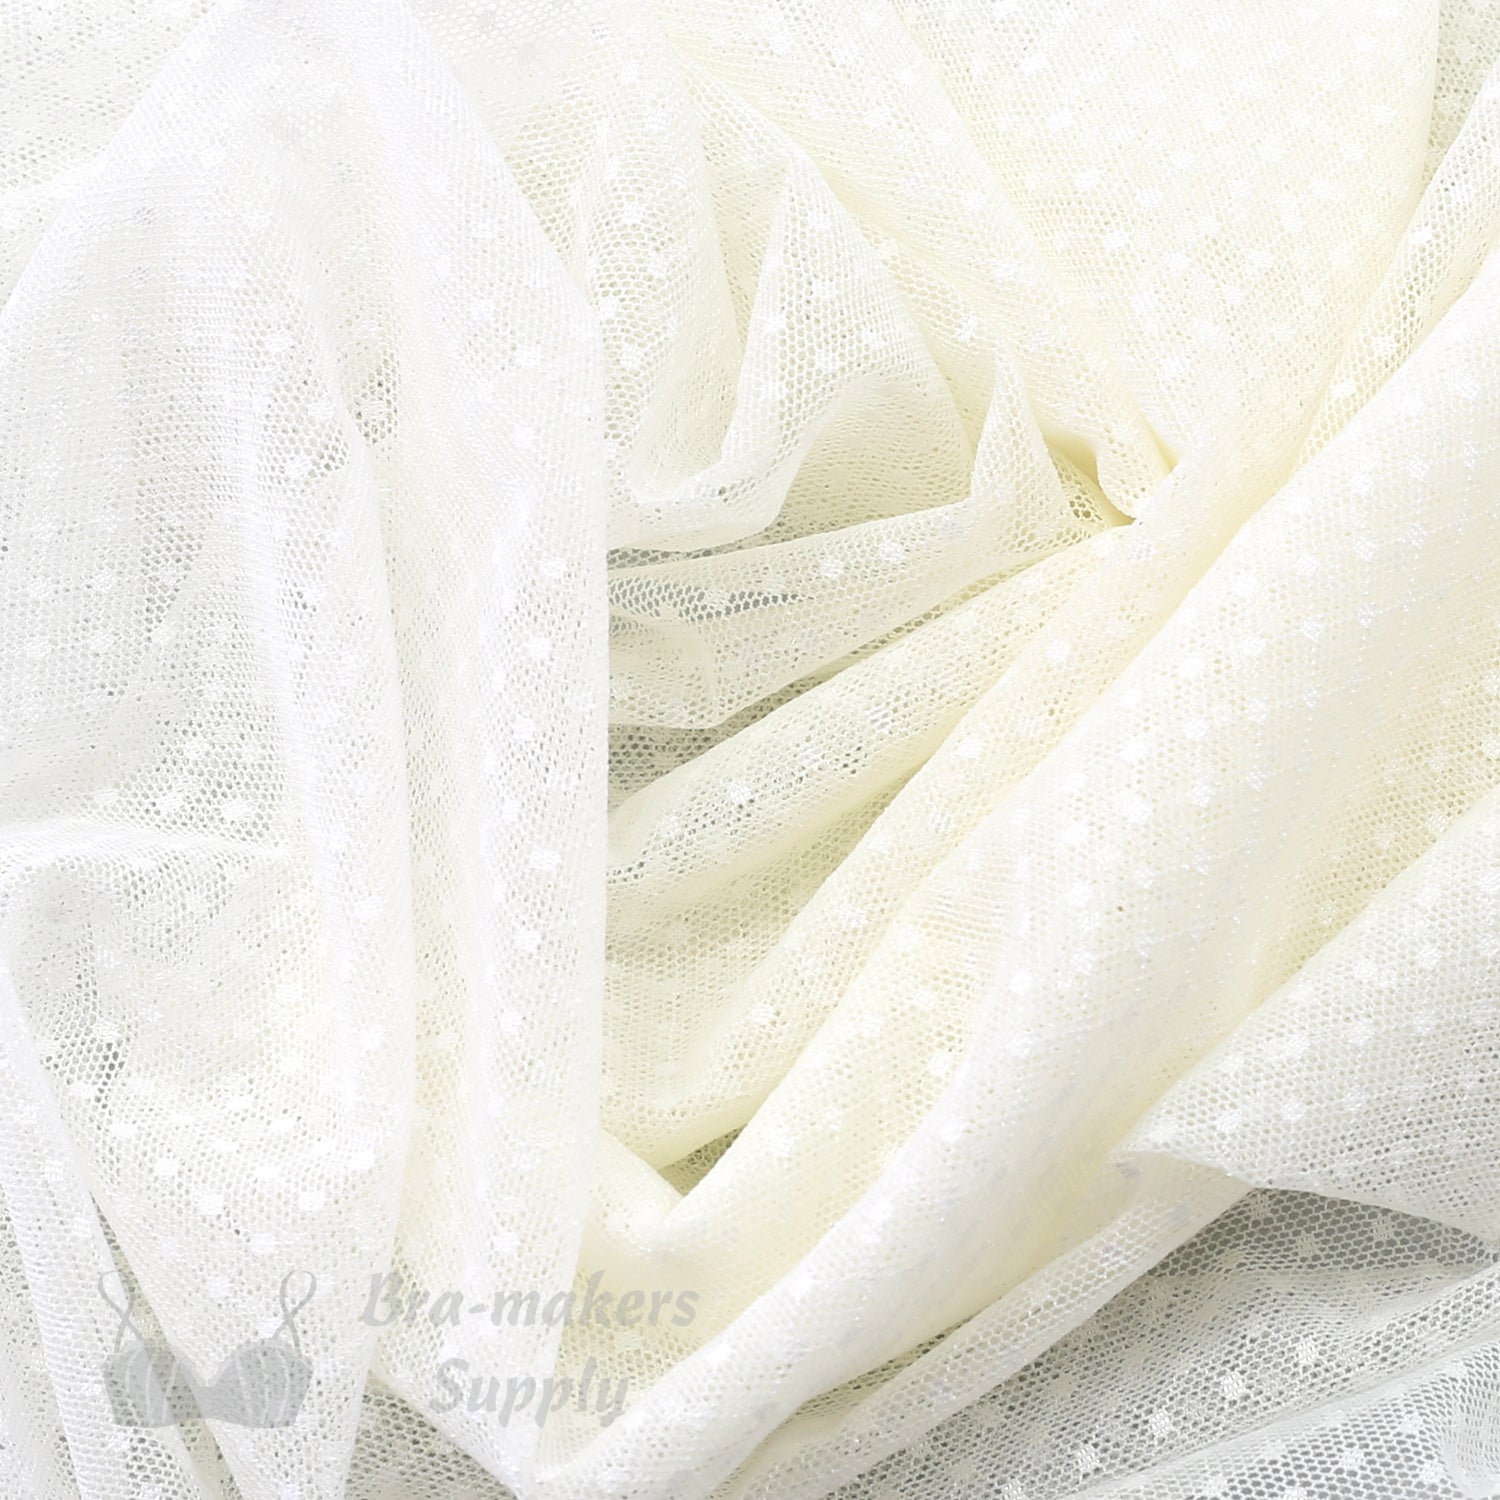 Soft Tulle Fabric 150cm Wide - Blush – On Trend Fabrics